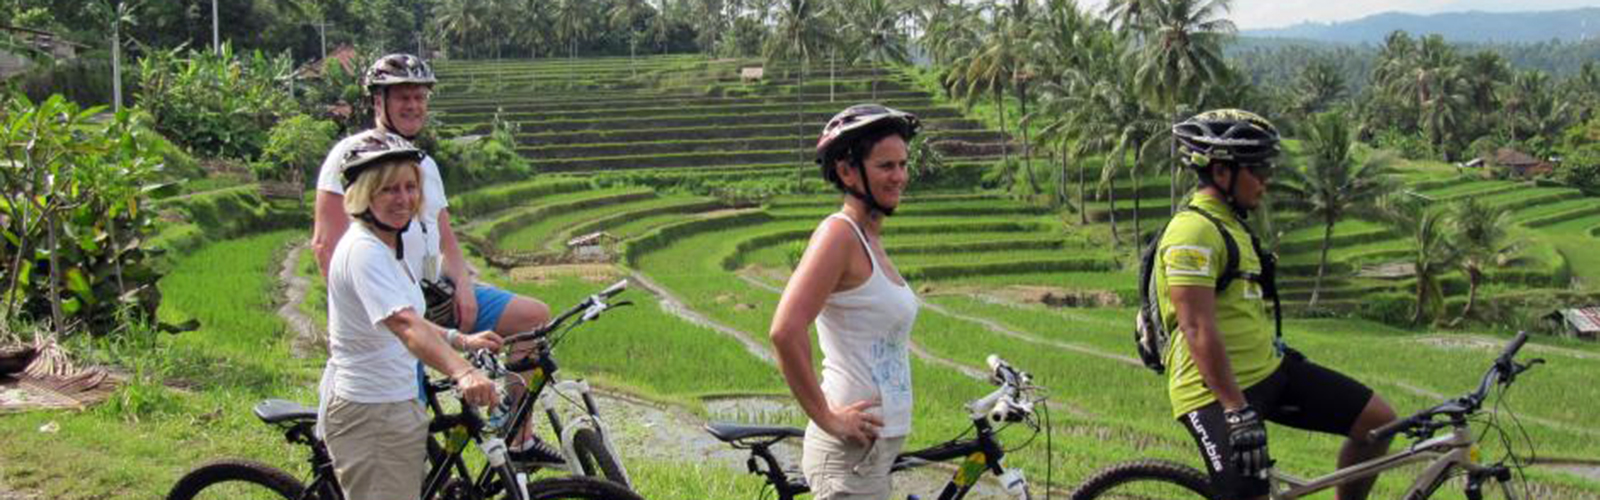 Cykeltur omkring Ubud